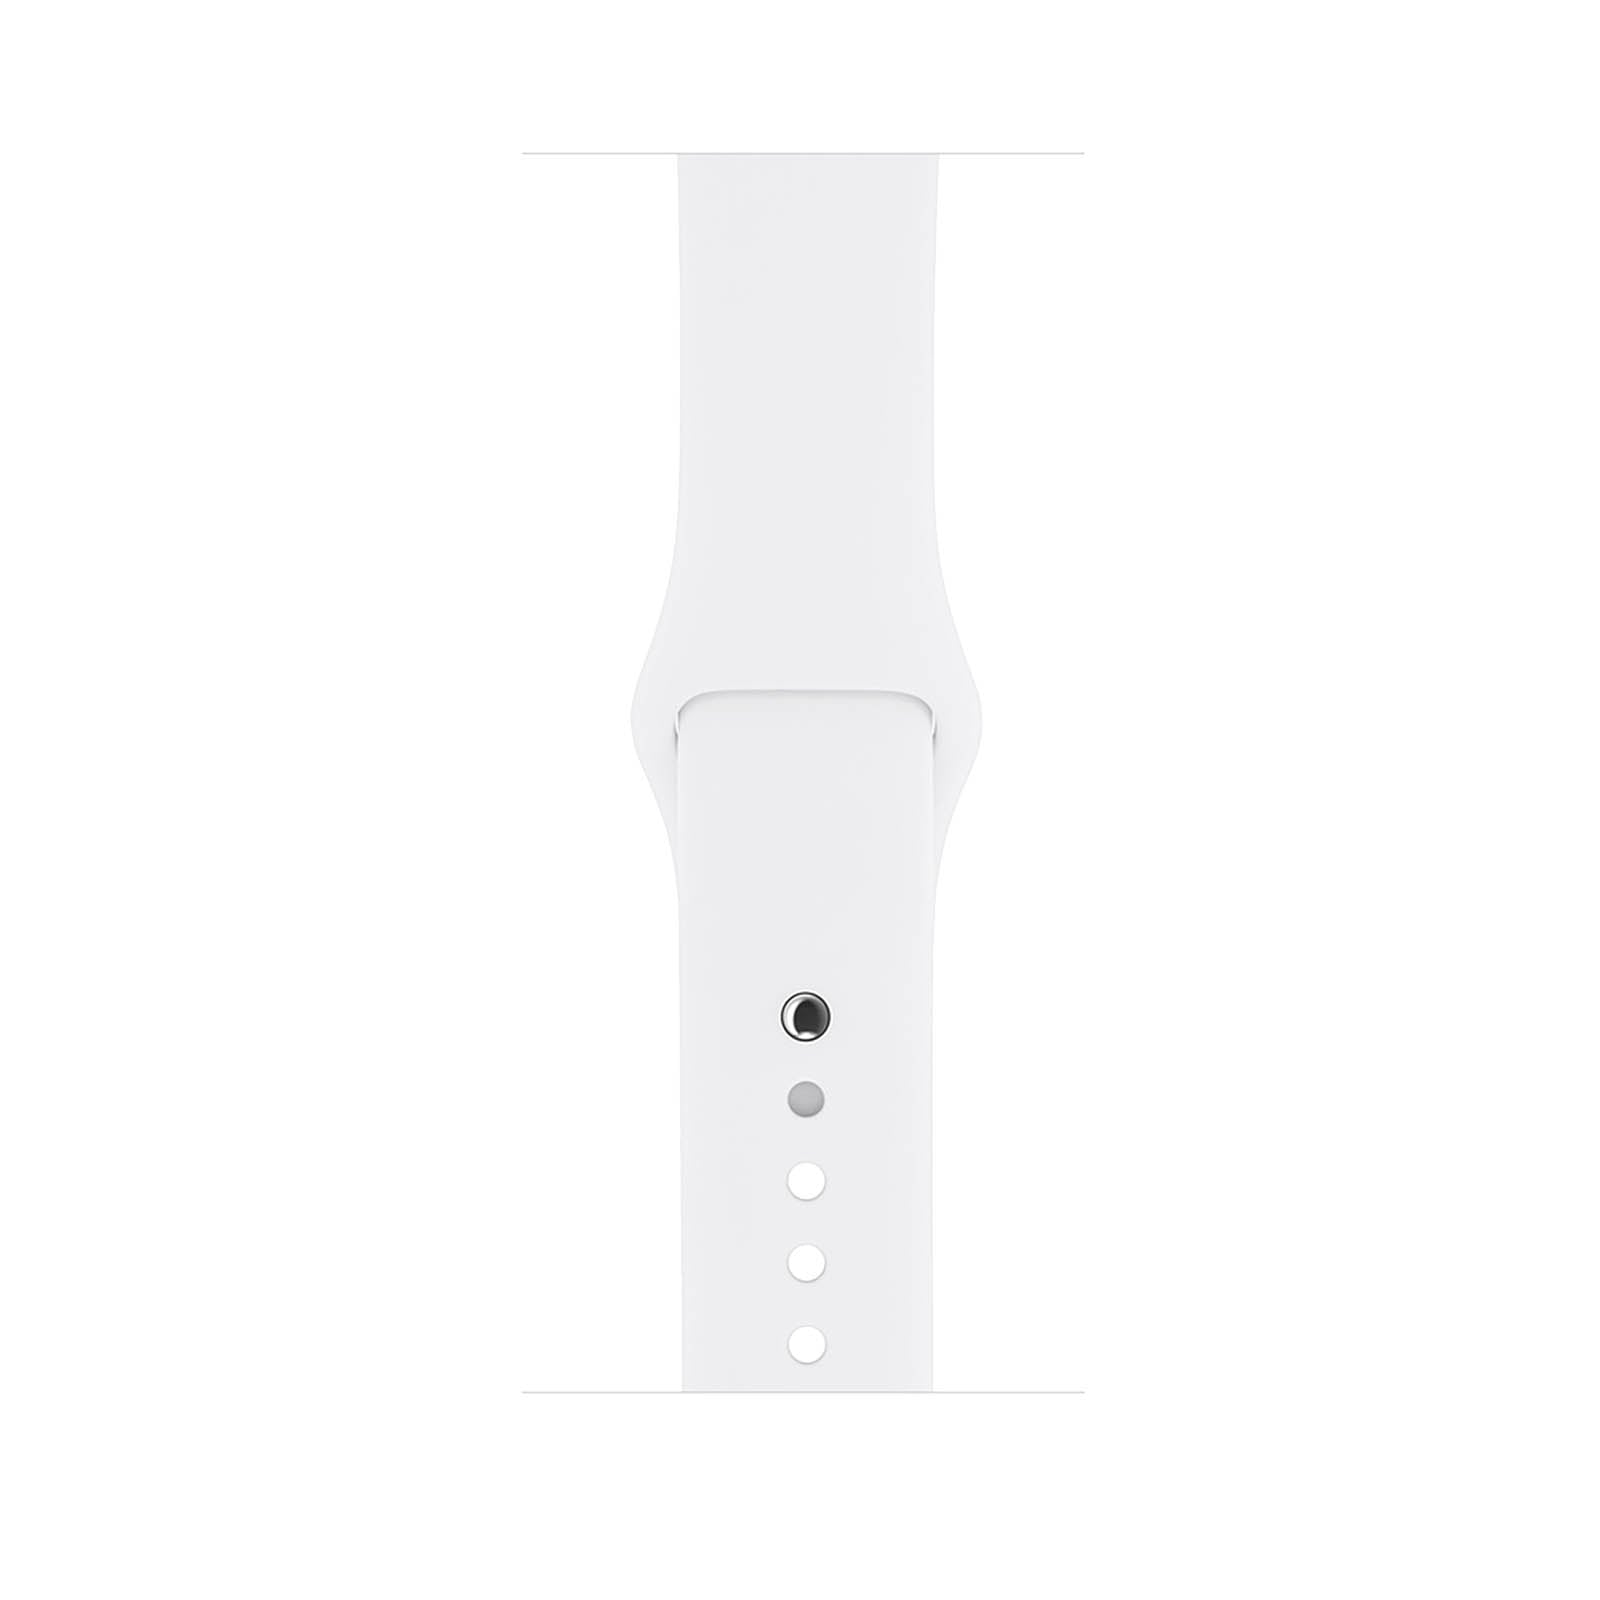 Apple Watch Series 3 Aluminum 42mm Ohne Vertrag Gold Sehr Gut